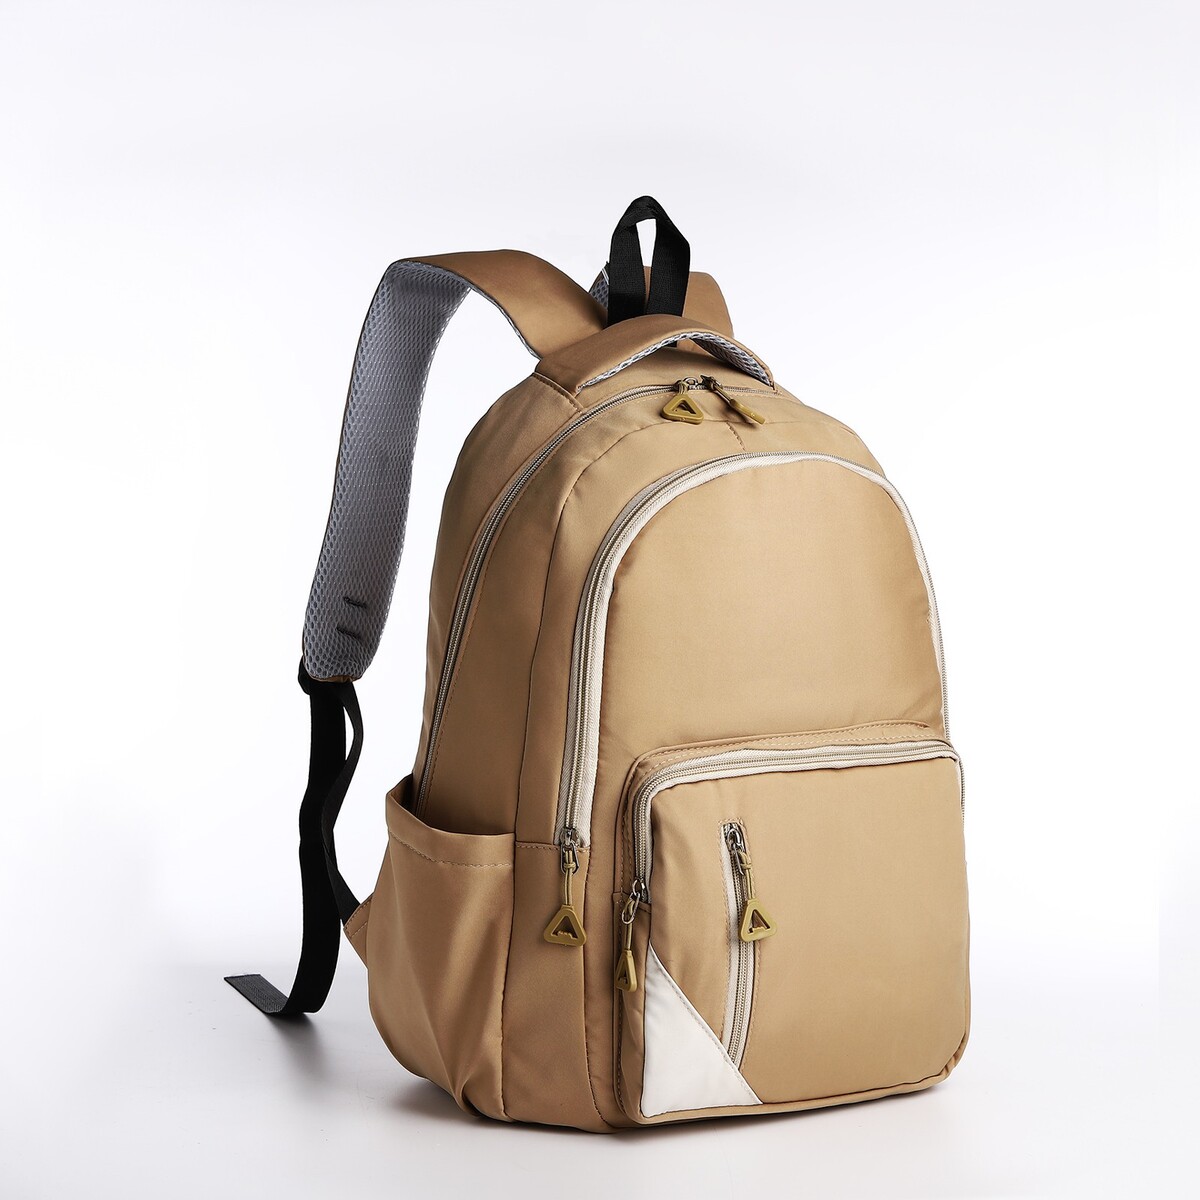 Рюкзак молодежный из текстиля, 2 отдела, 3 кармана, цвет бежевый рюкзак на молнии 3 наружных кармана бежевый зеленый